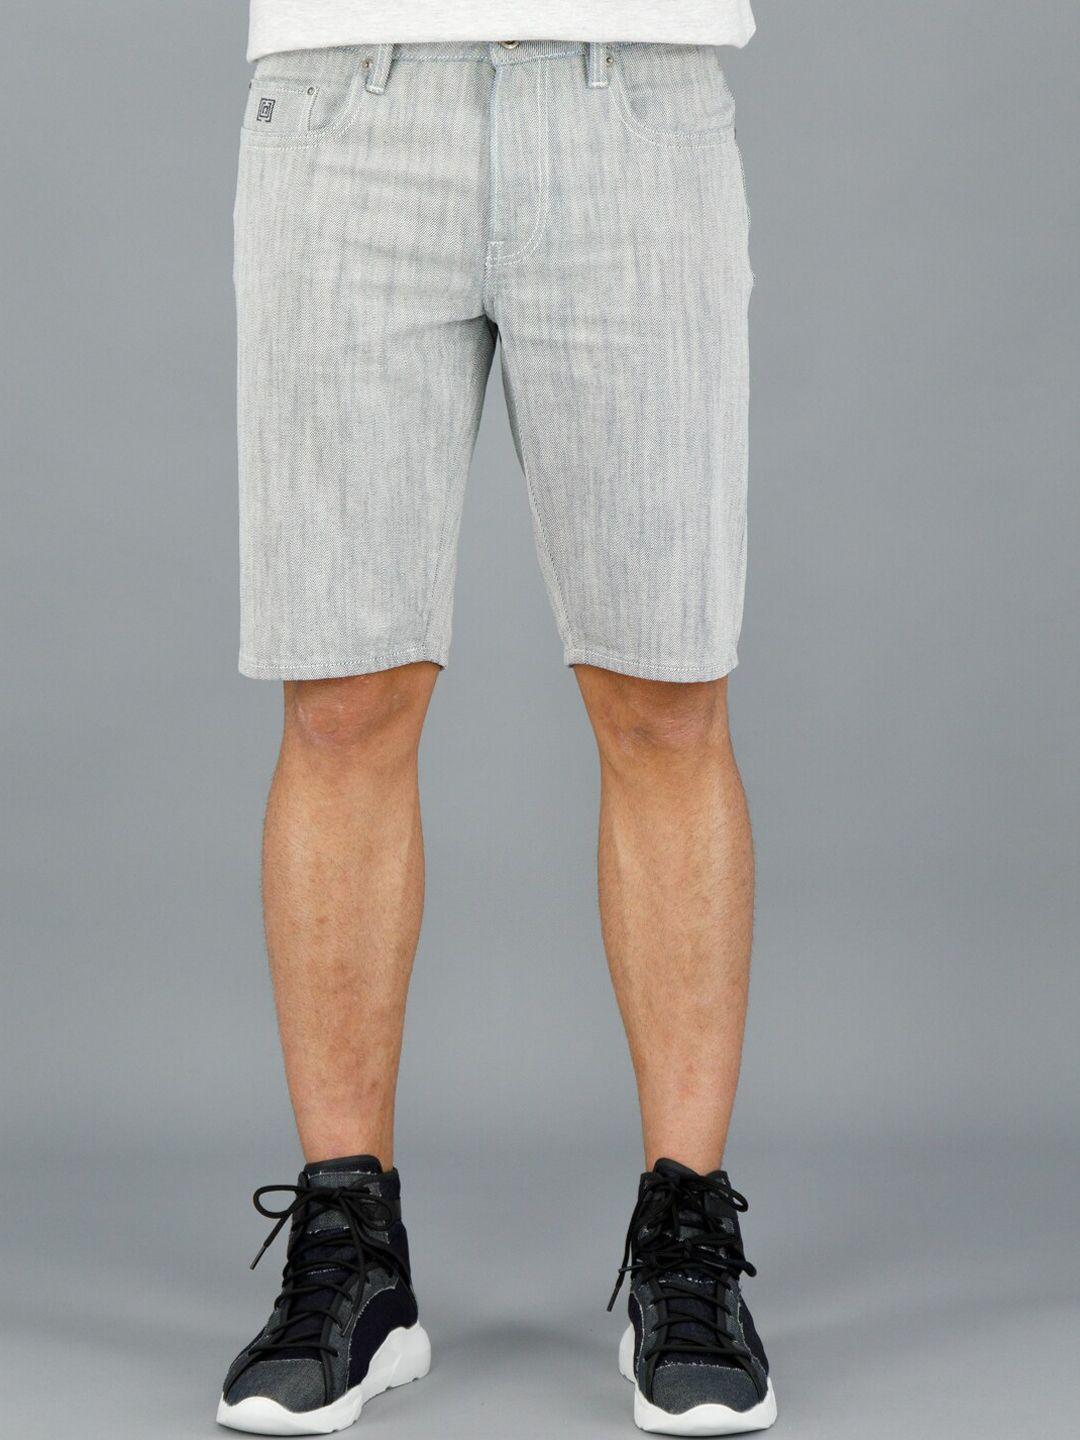 freesoul-men-grey-striped-shorts